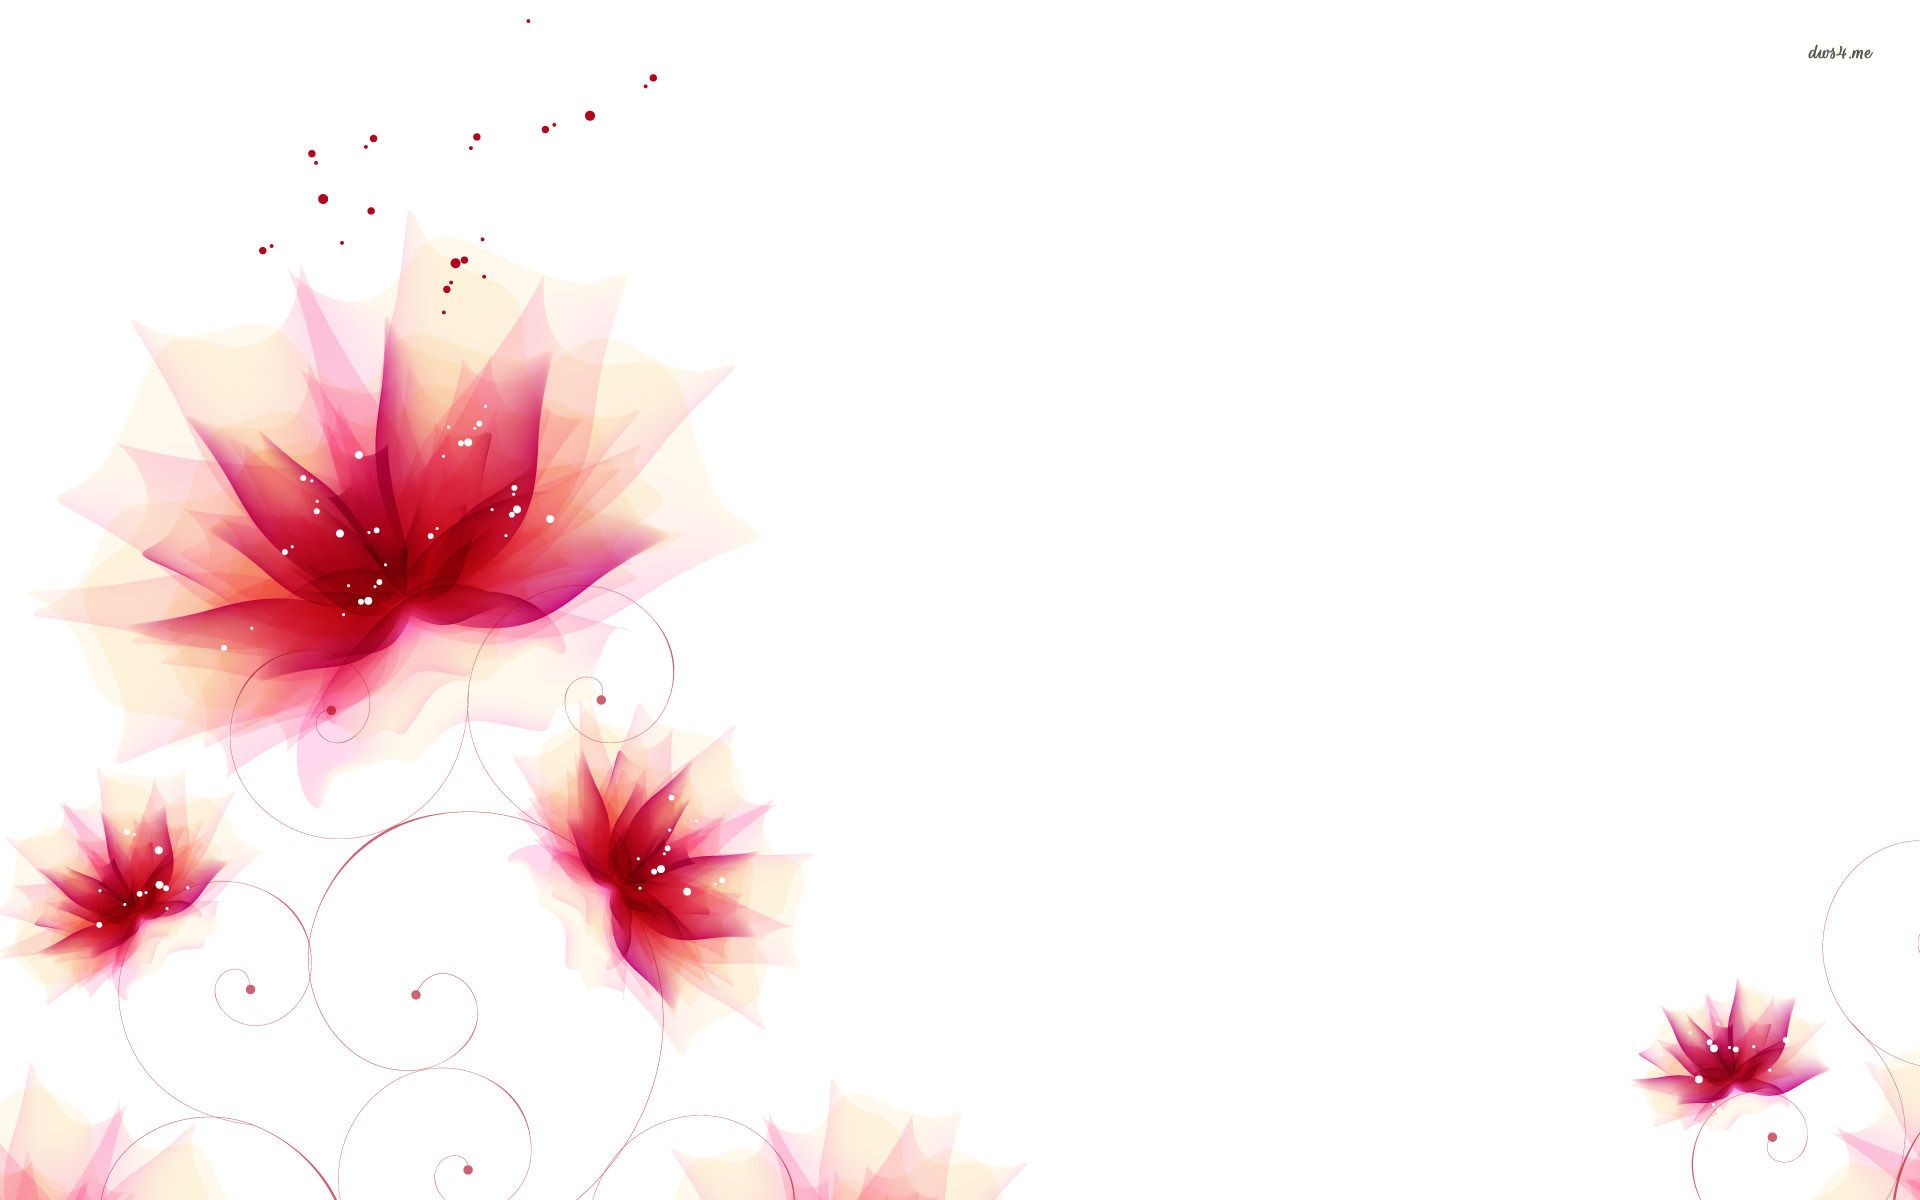 Papel pintado de flores - Fondos de pantalla vectoriales - # 4416